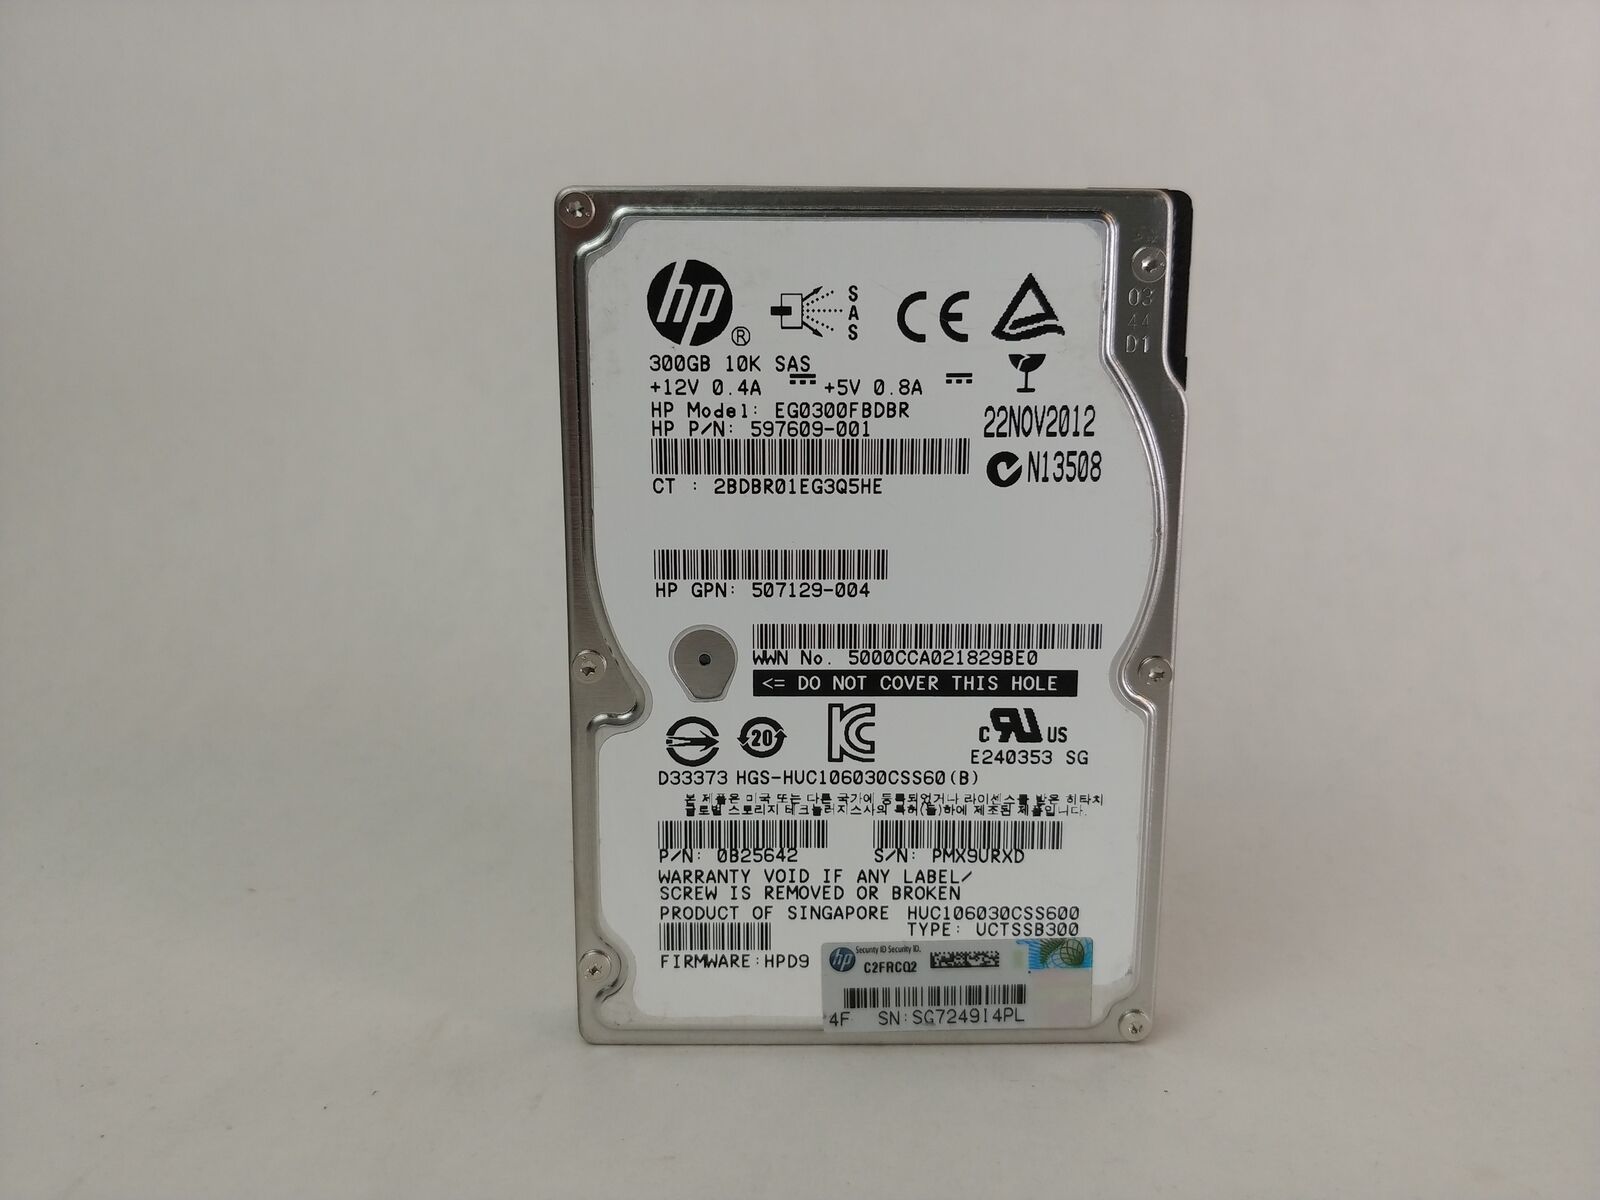 Hitachi HP HUC106030CSS600 300 GB 2.5 in SAS 2 Enterprise Hard Drive